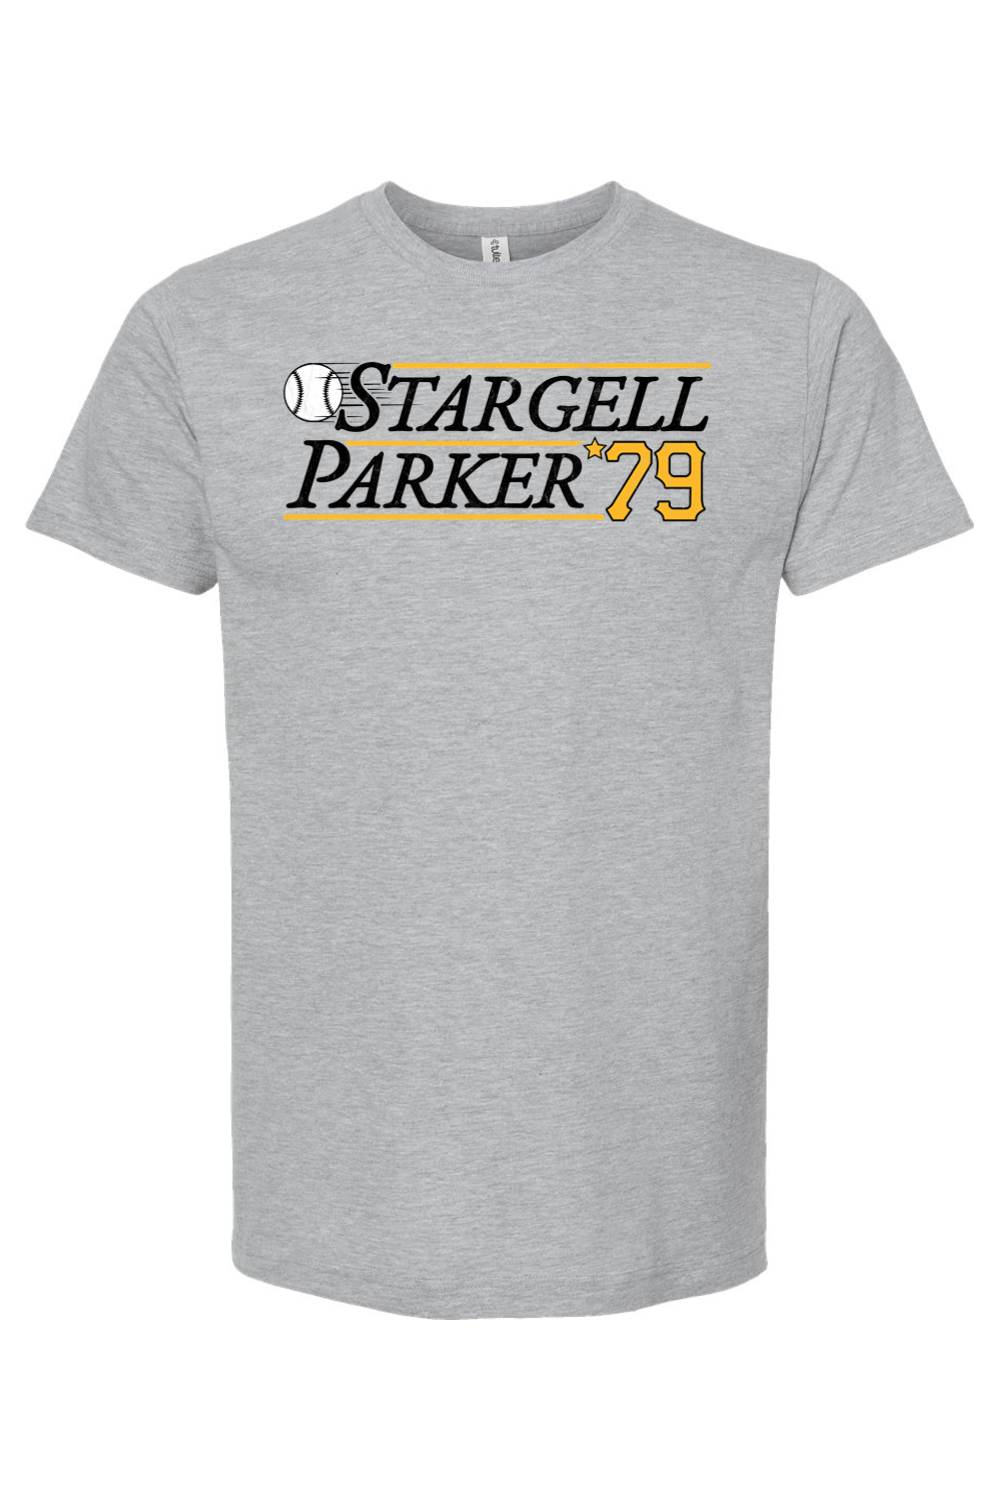 Stargell Parker '79